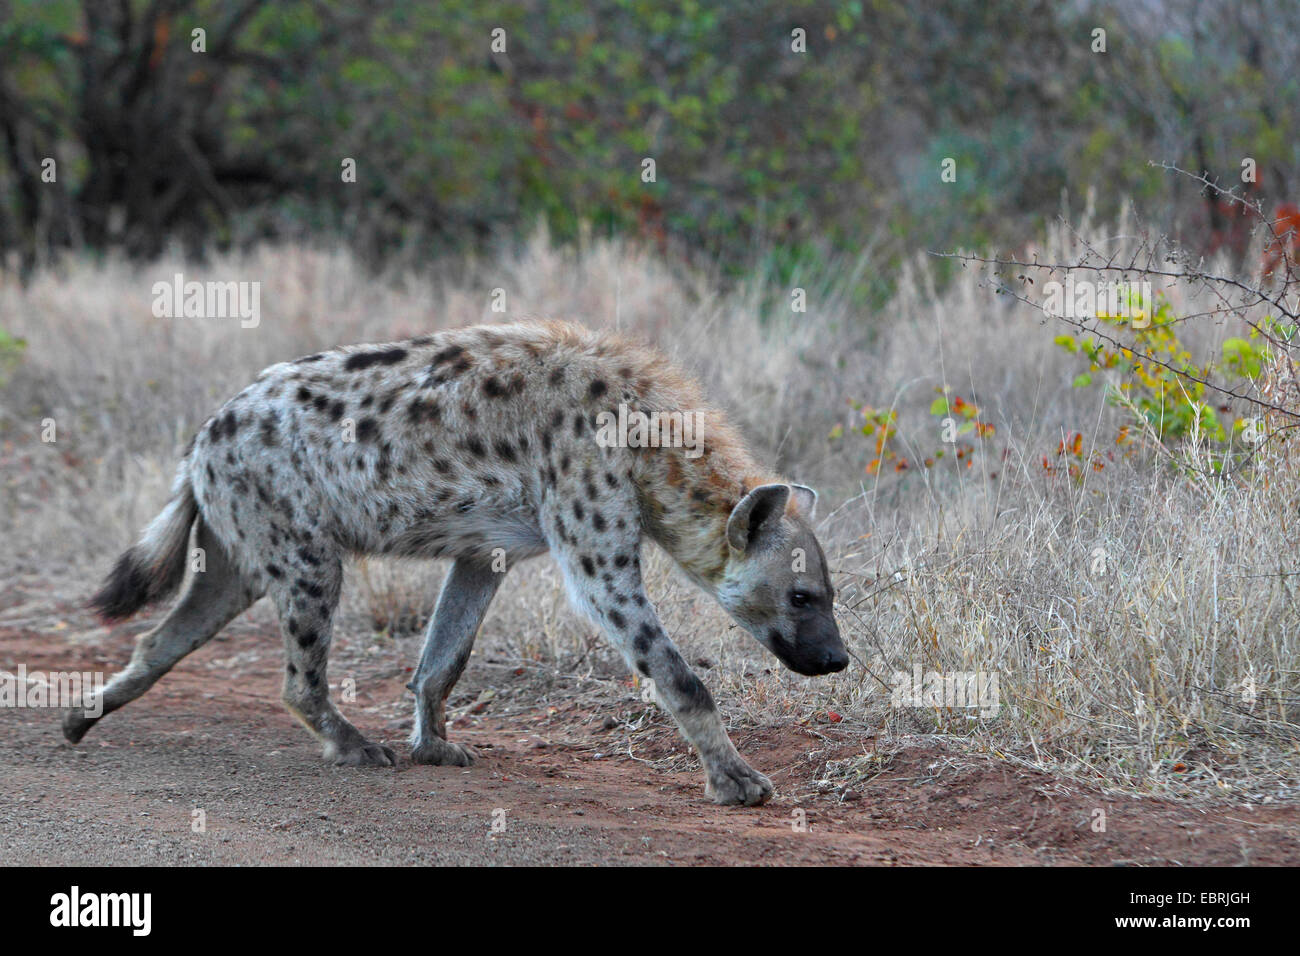 spotted hyena (Crocuta crocuta), walking, South Africa, Kruger National Park Stock Photo